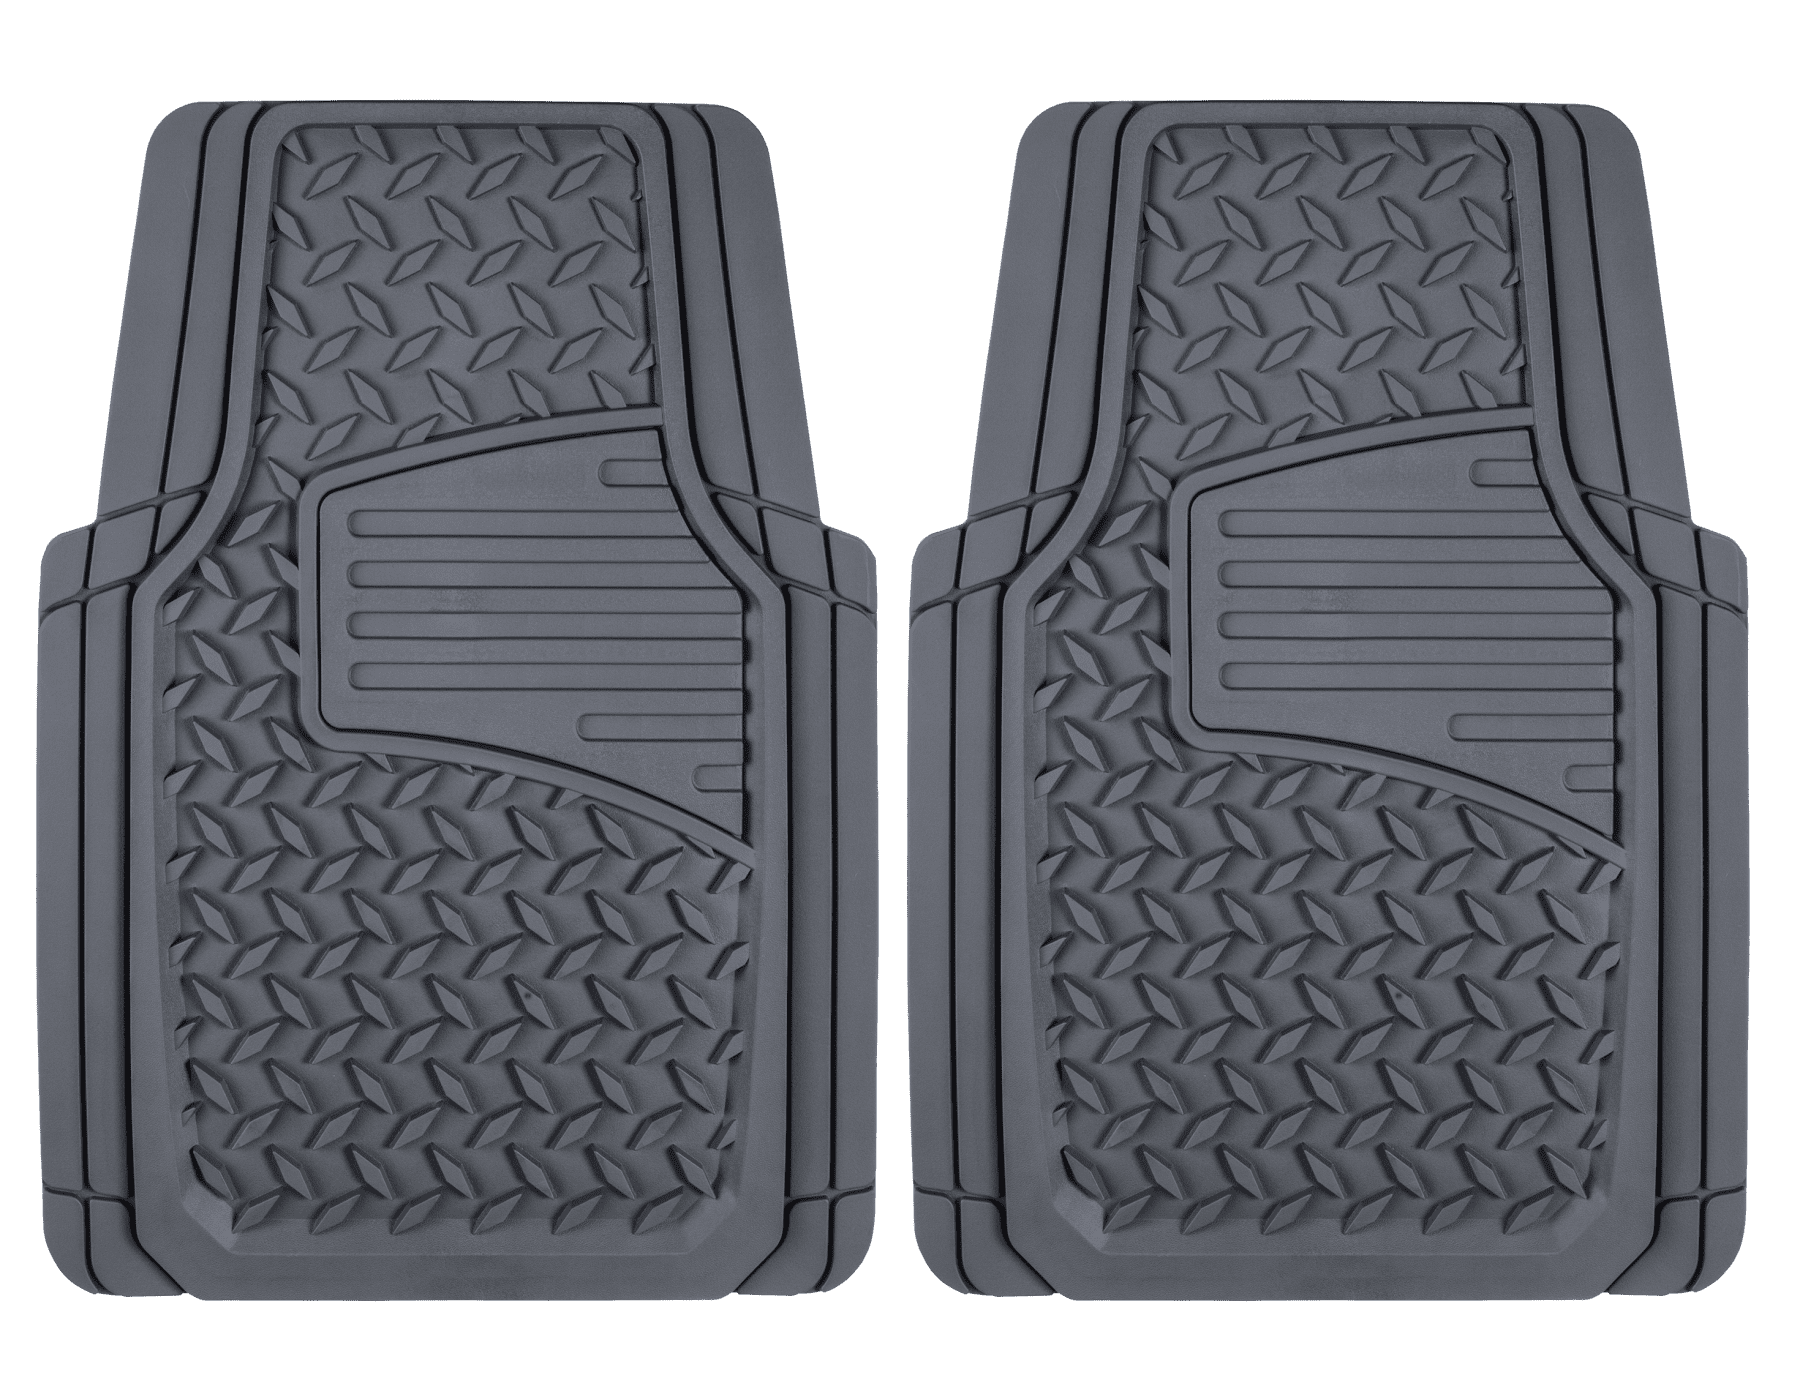 Auto Drive 2PC Rubber Floor Mats Diamond Plate Grey - Universal Fit